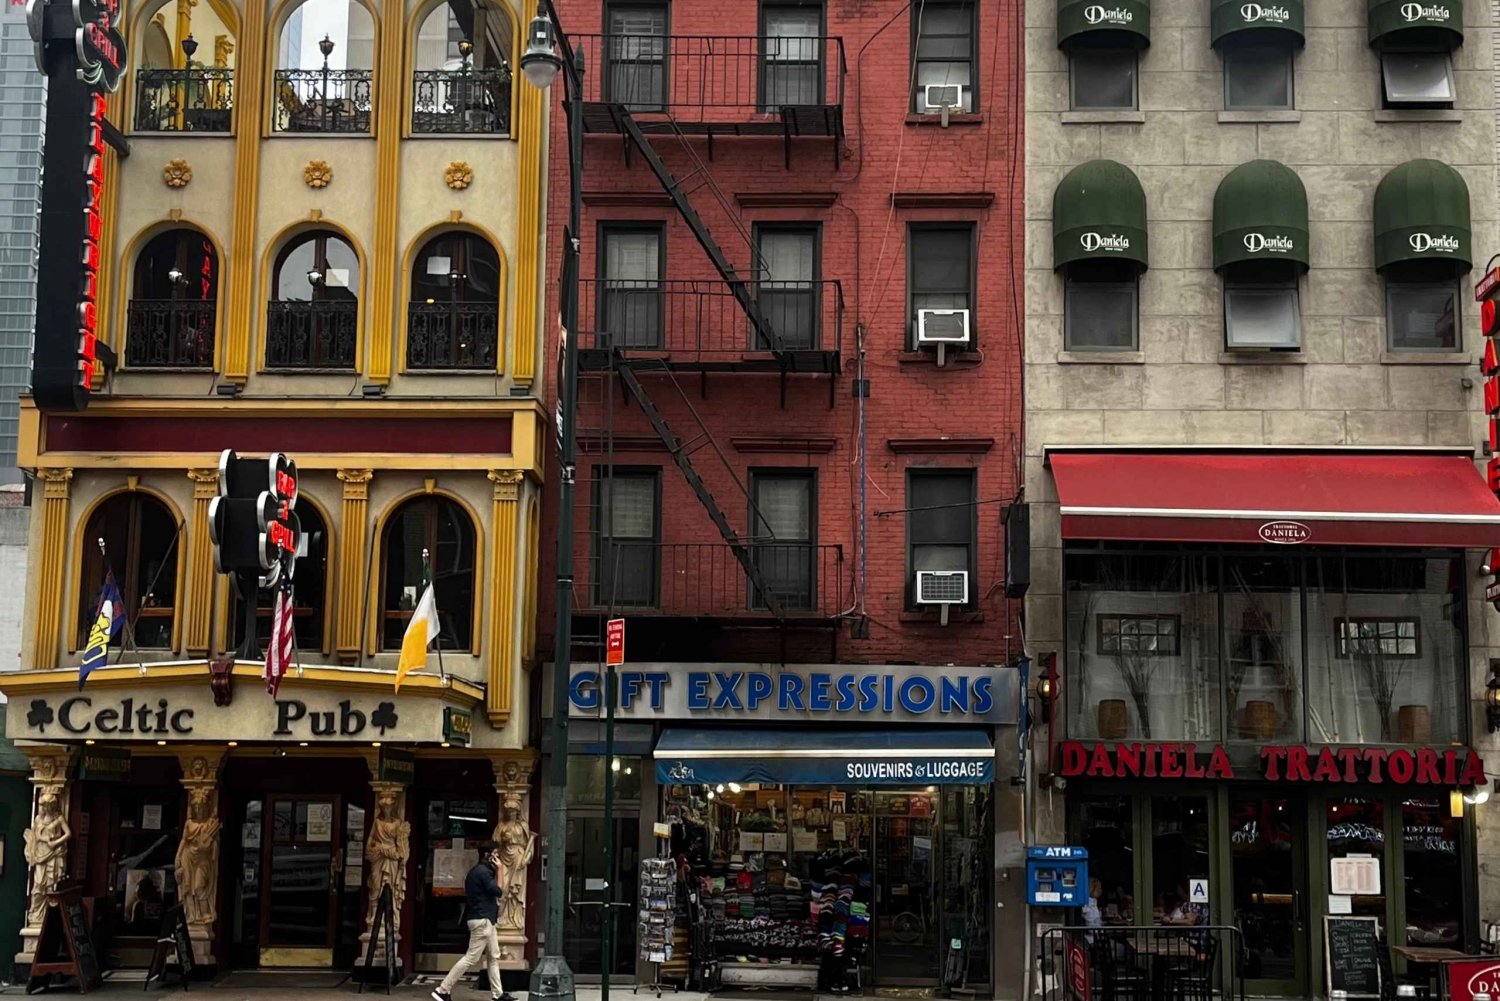 New York City: Tour of 'Most Dangerous' Neighborhoods